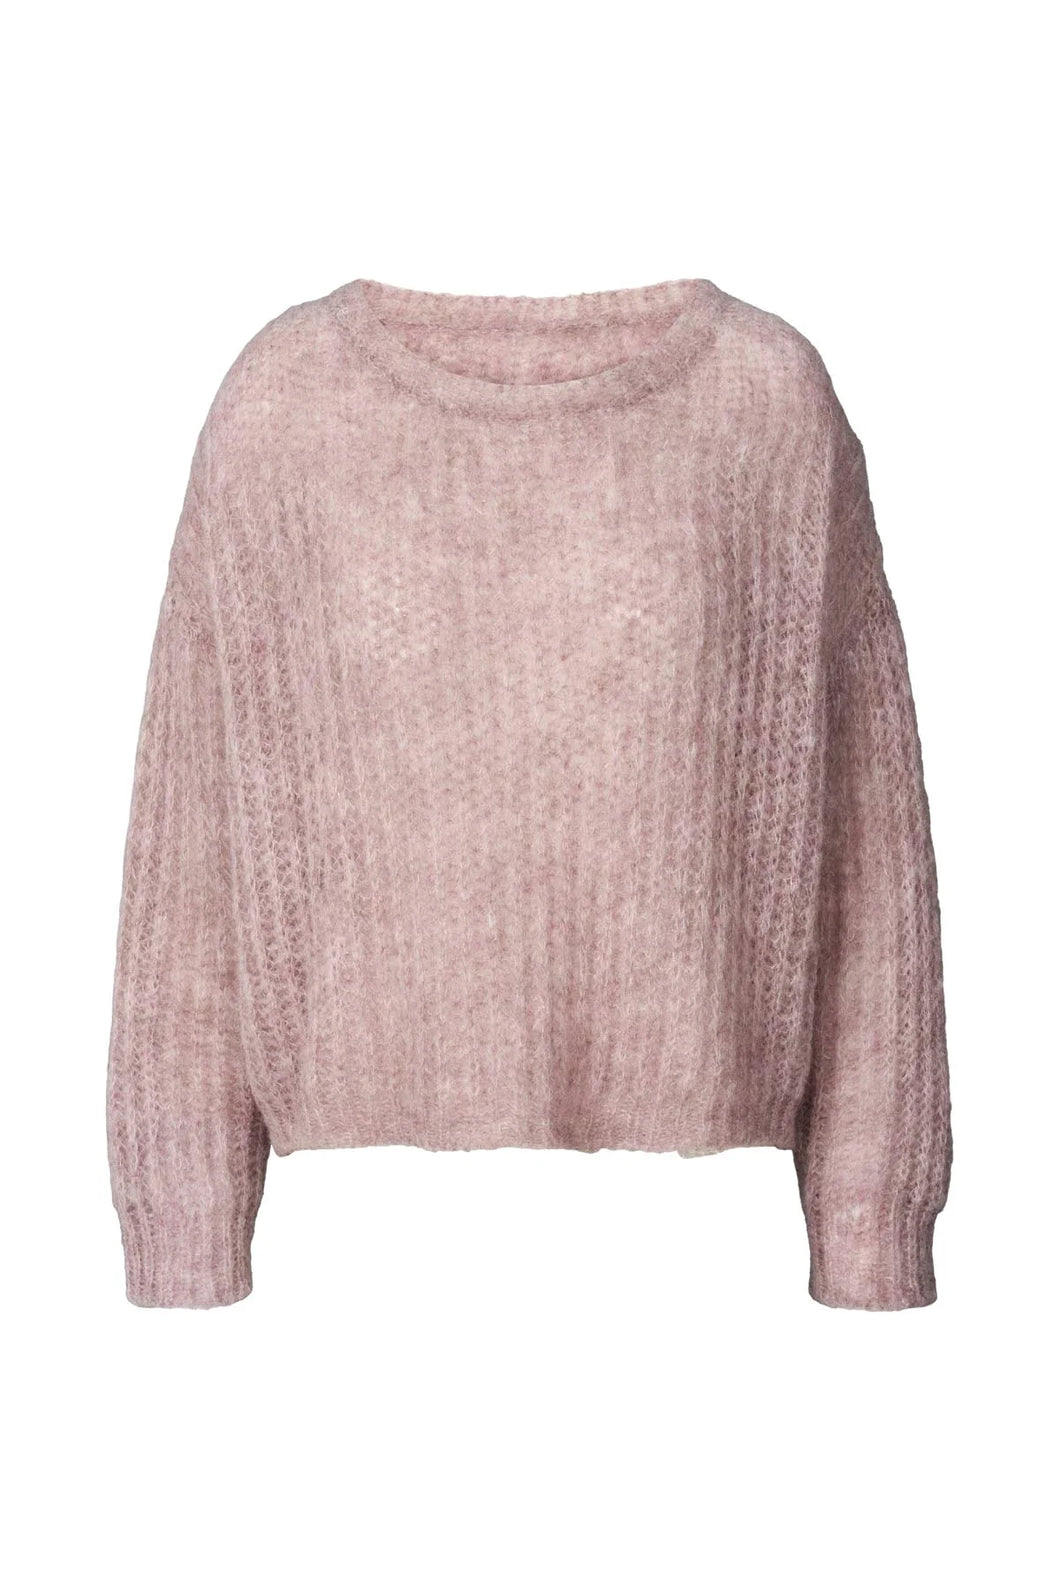 Rabens Saloner Engla Fluffy Sweater Dusty Rose W24109301